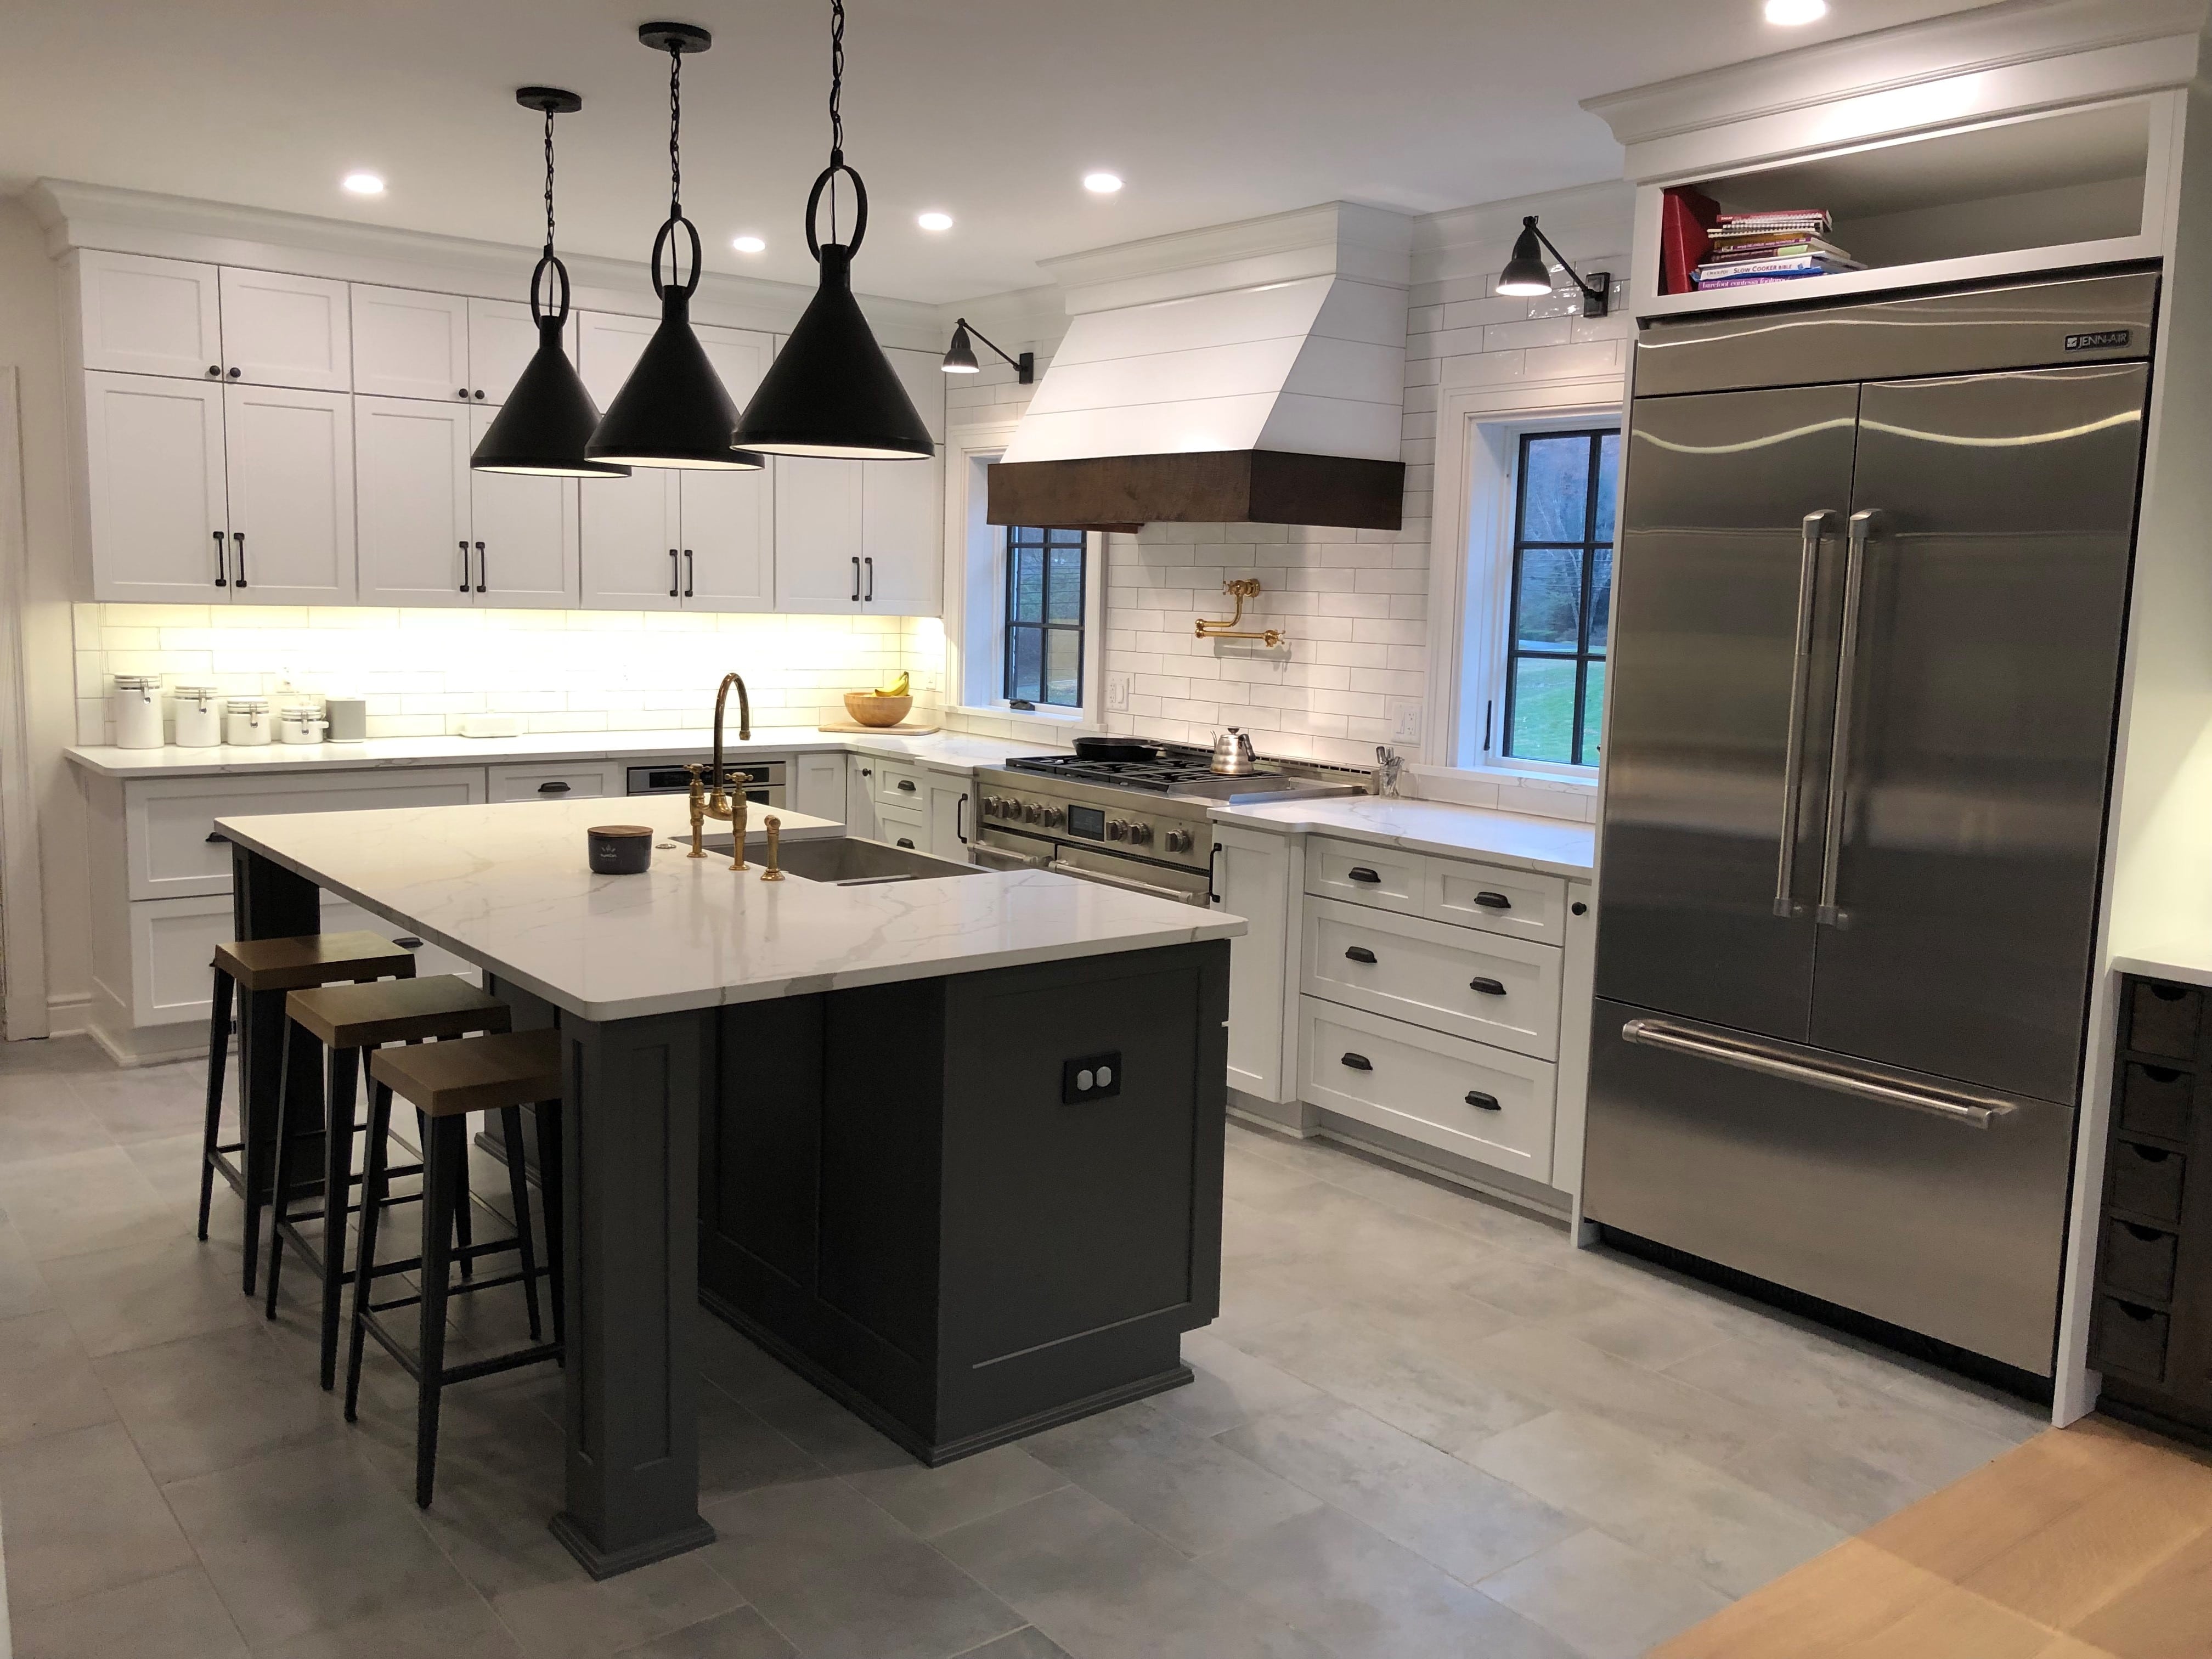 New 2021 Kitchen Design Trends - BC Stone